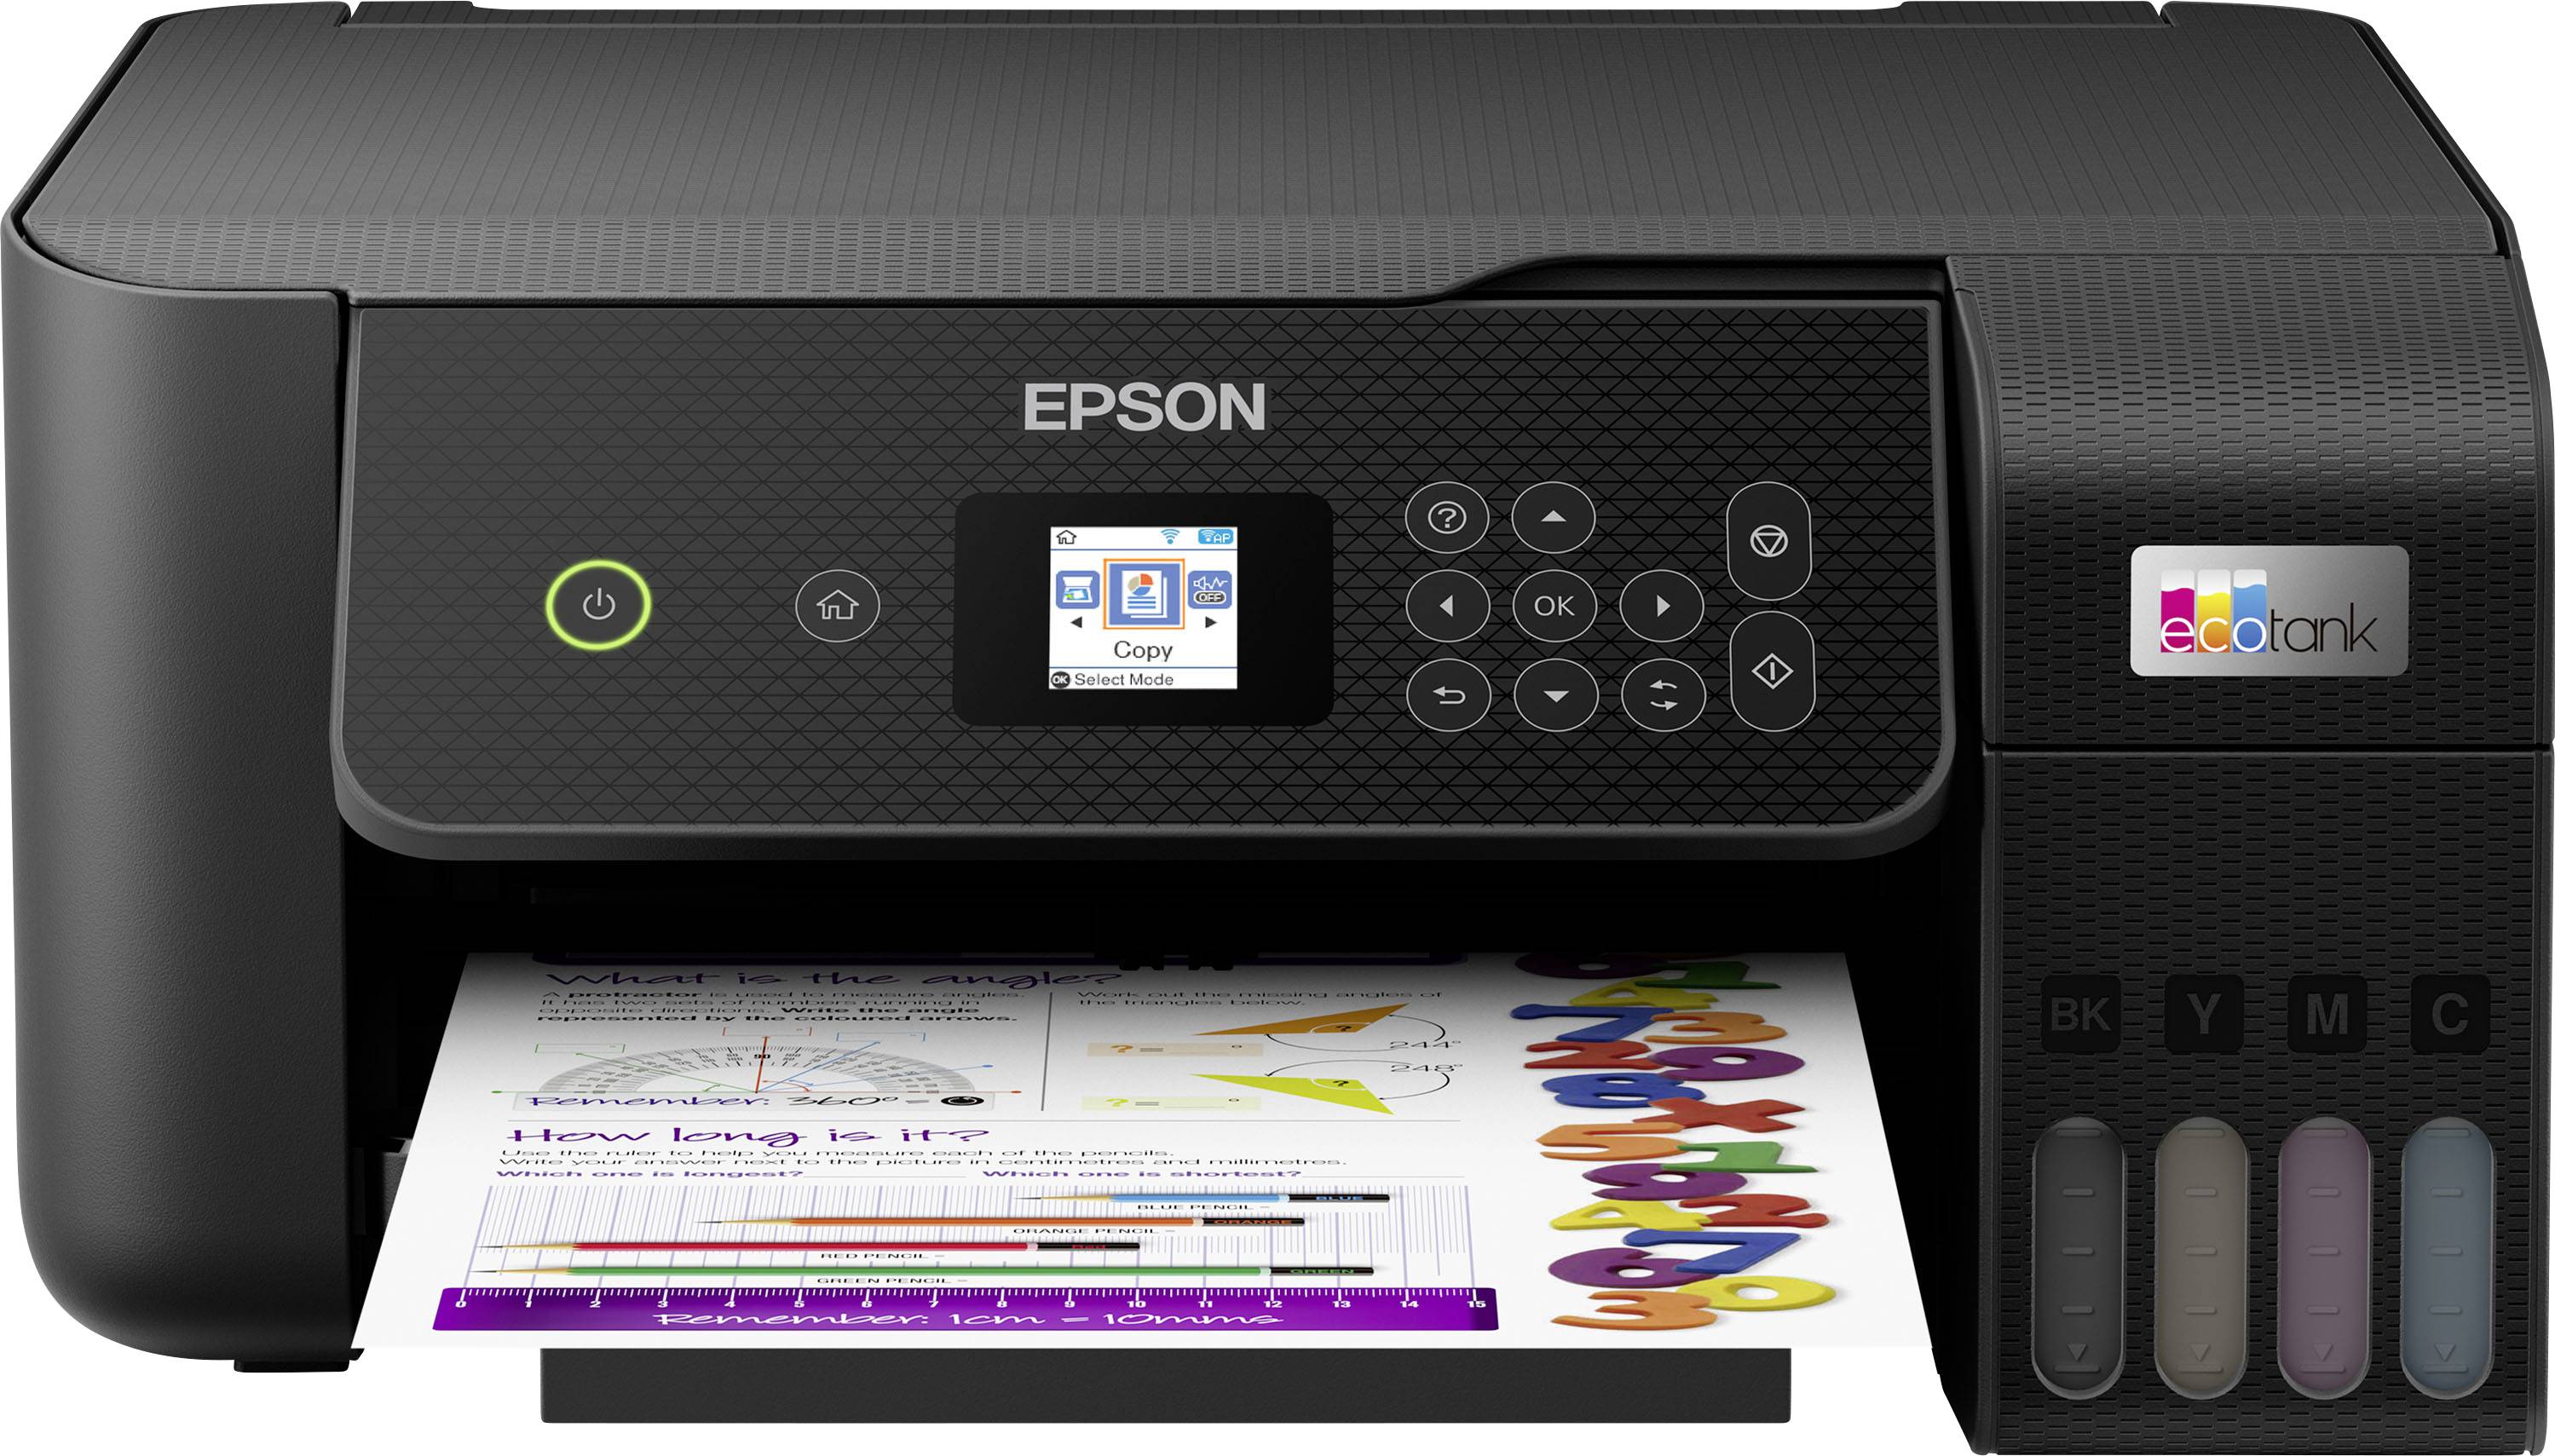 ET-2820 Inkjet multifunction printer A4 Printer, scanner, copier Duplex, Ink tank system, USB, Wi-Fi | Conrad.com